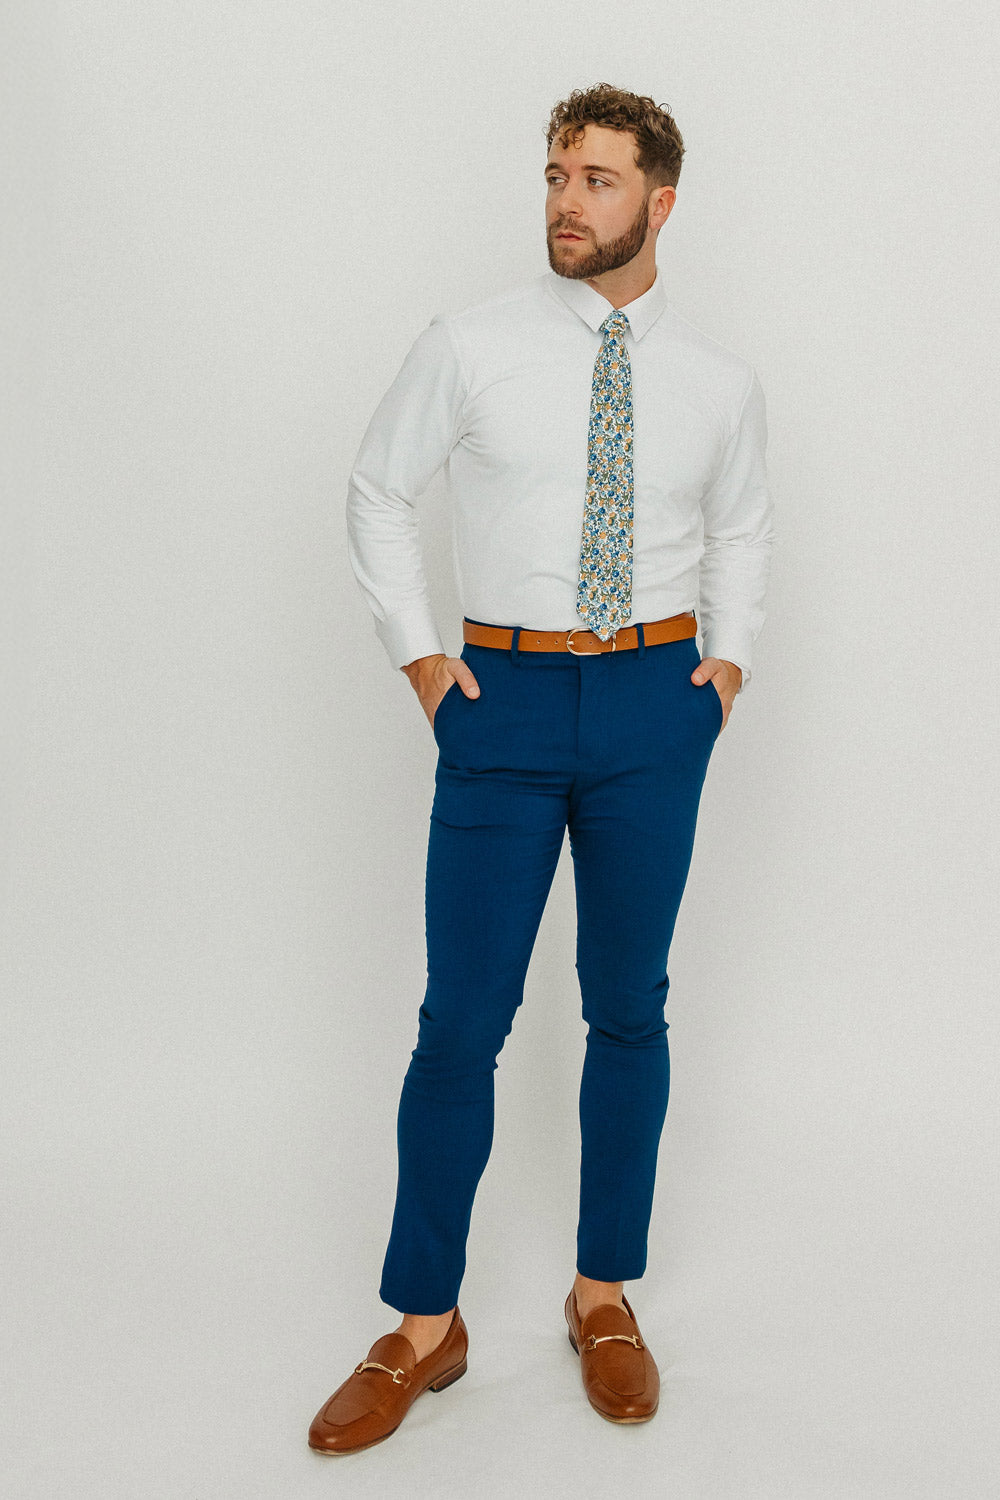 Alpine Blum tie worn with a white shirt, brown belt and blue pants.